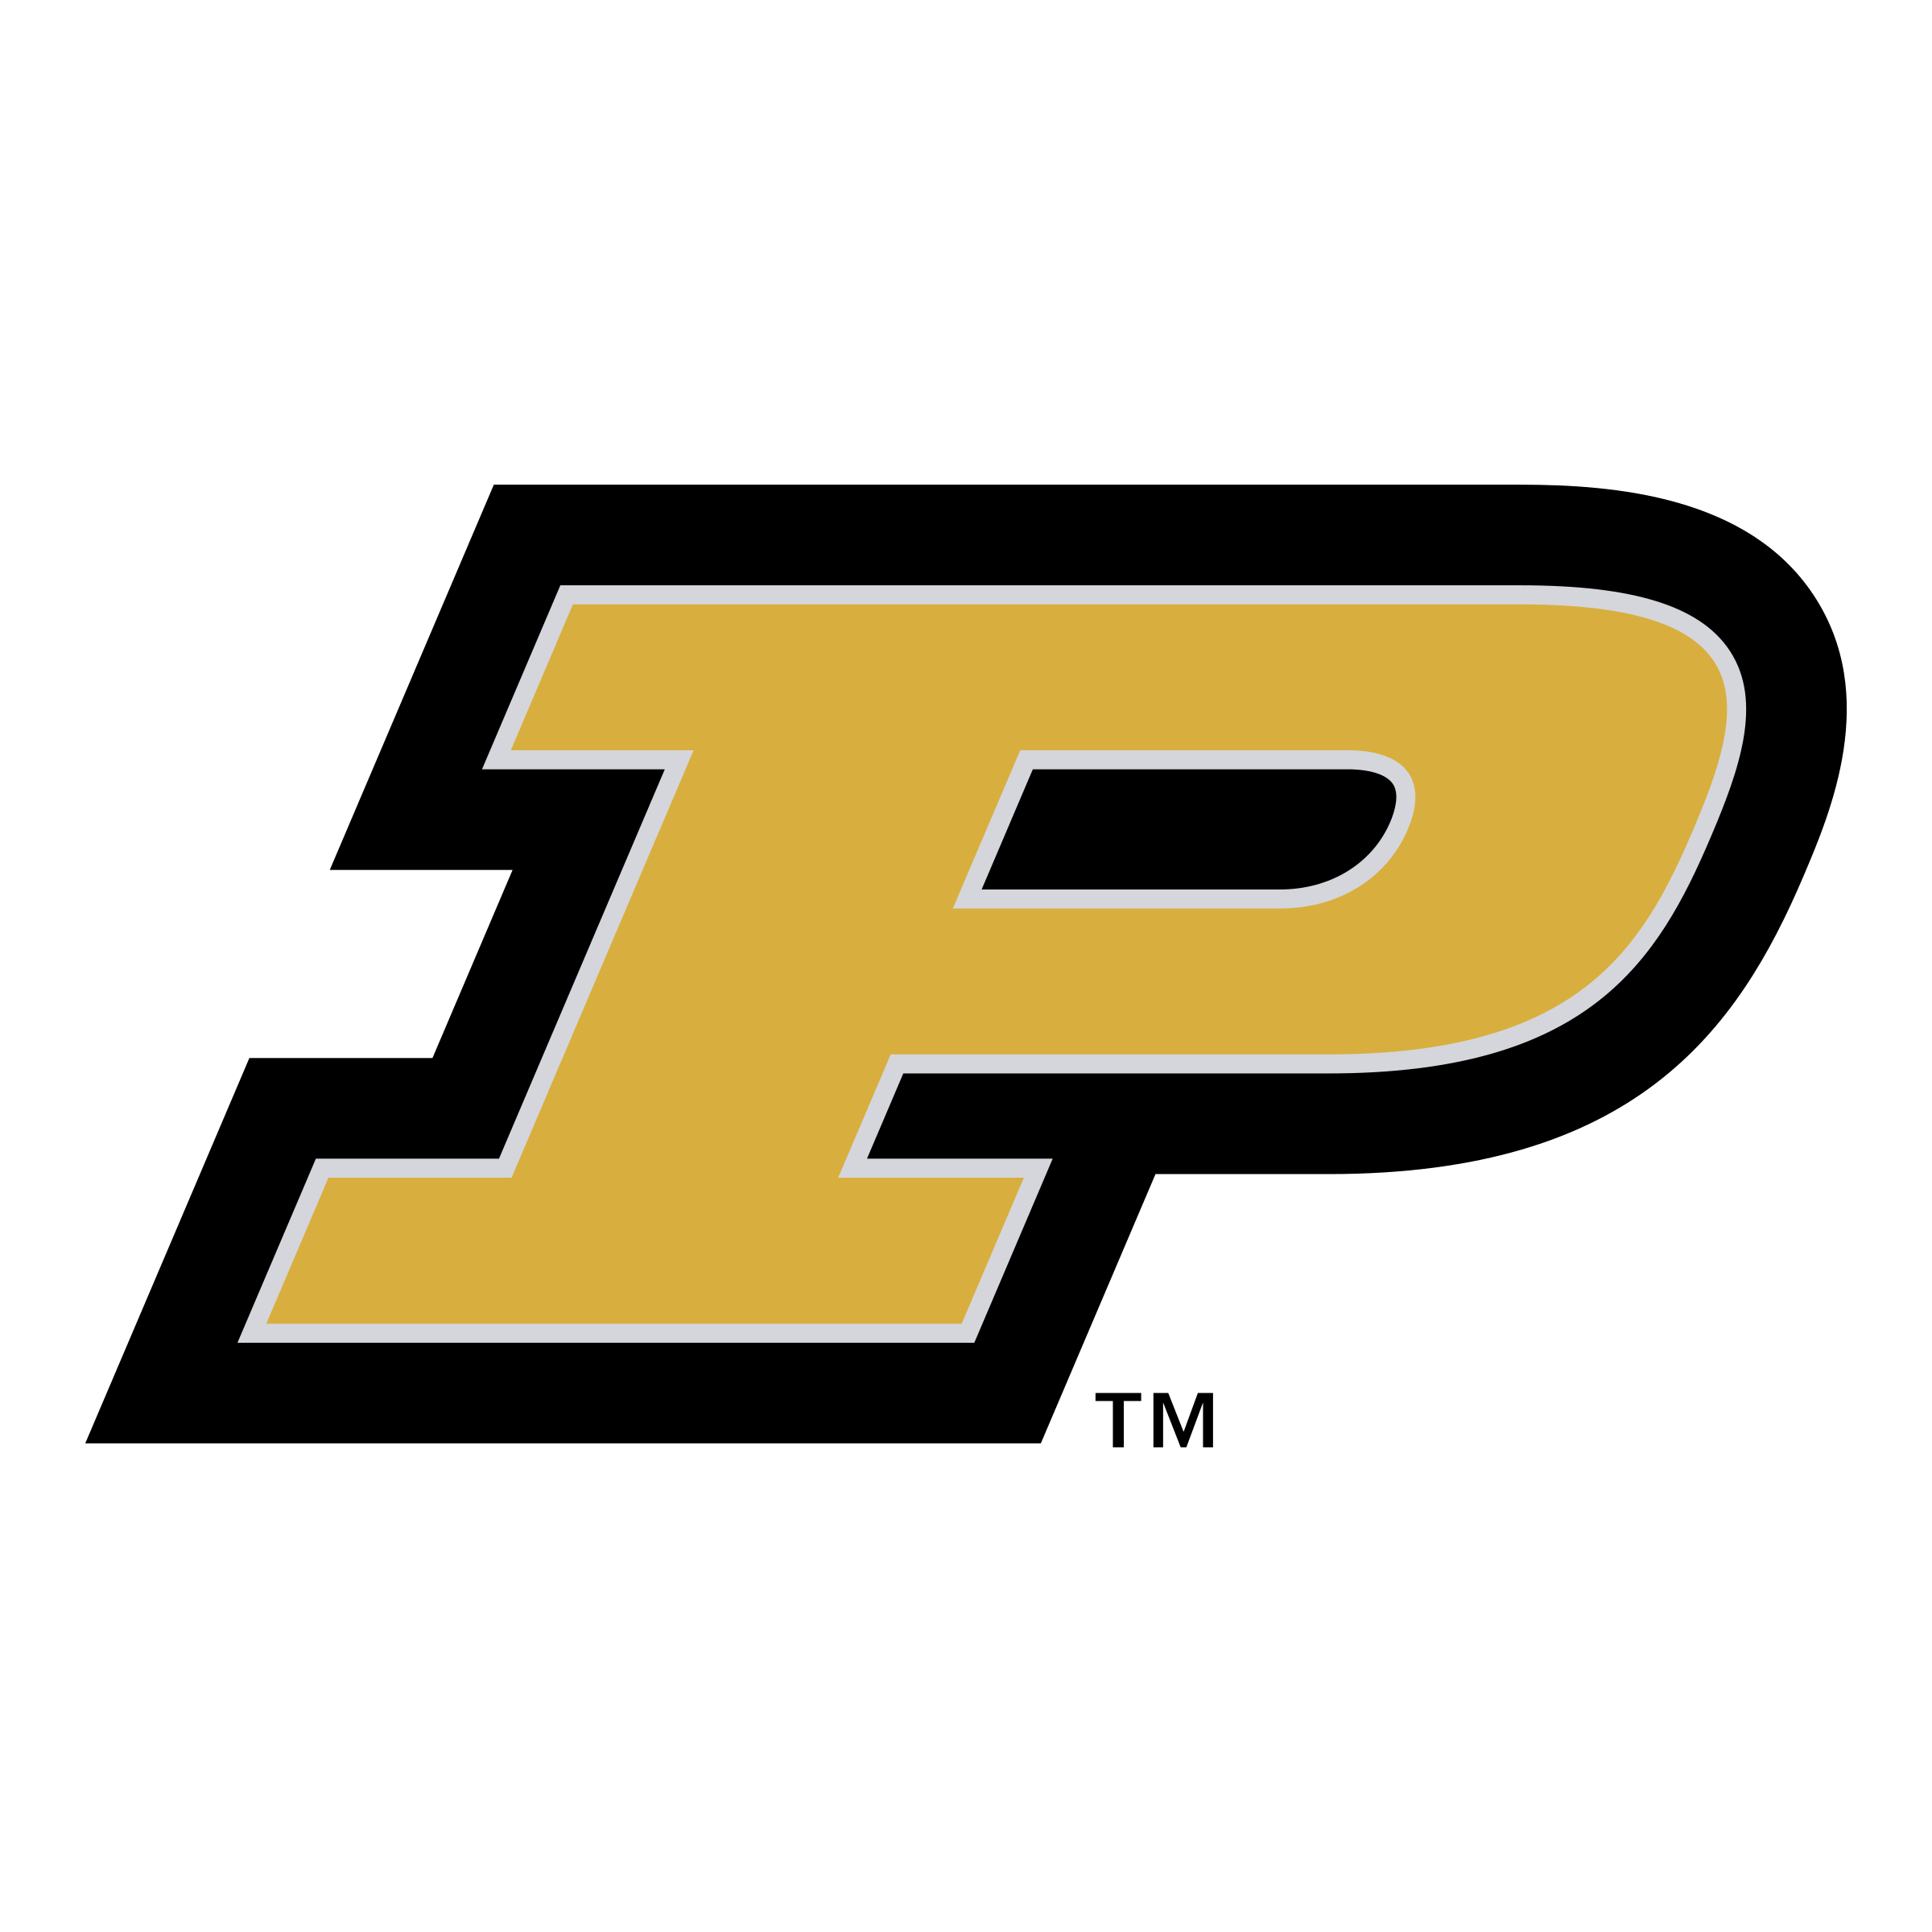 Purdue University Logo - Purdue University BoilerMakers Logo PNG Transparent & SVG Vector ...